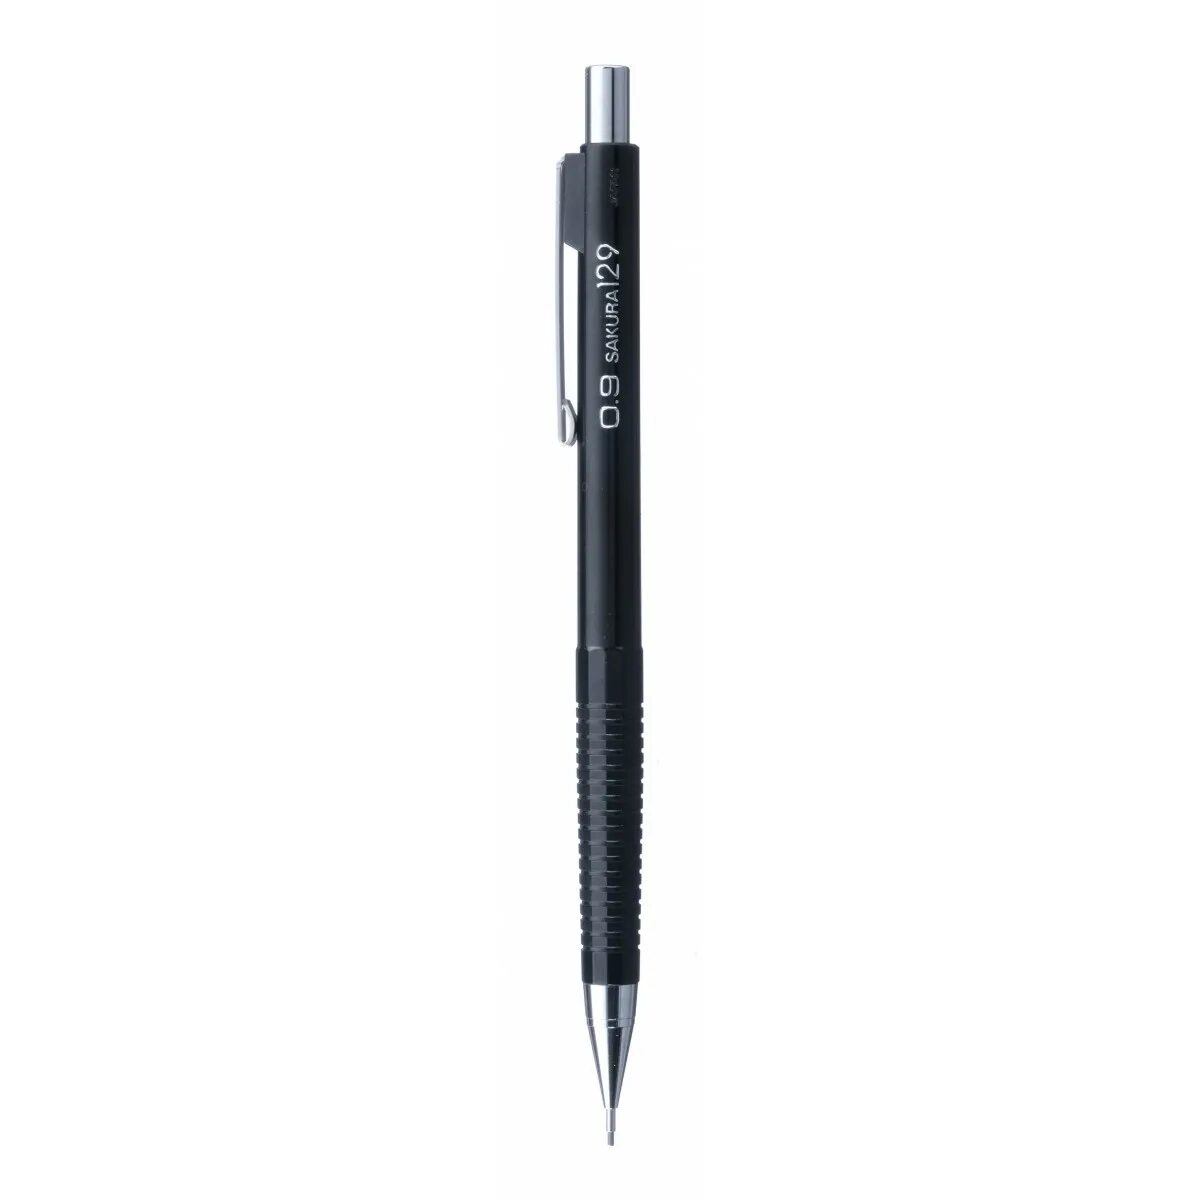 Карандаш 0.7. Механический карандаш Faber Castell. Карандаш 0.7 мм. Стержни для карандашей 0.5 мм. Ручка+карандаш 0,7 al 4842.